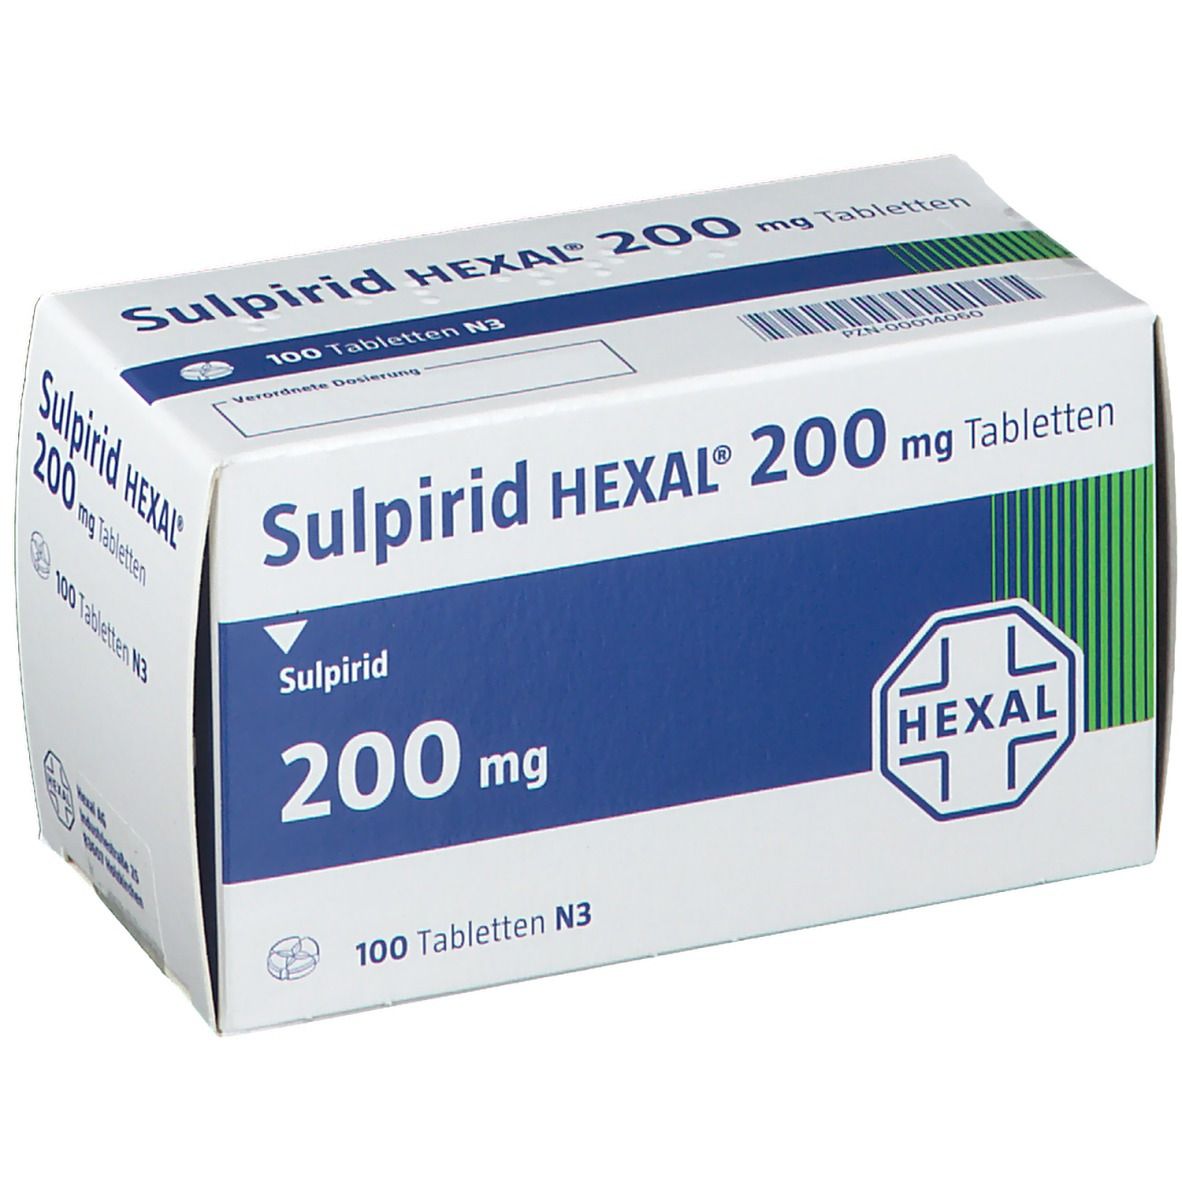 Sulpirid HEXAL® 200 mg